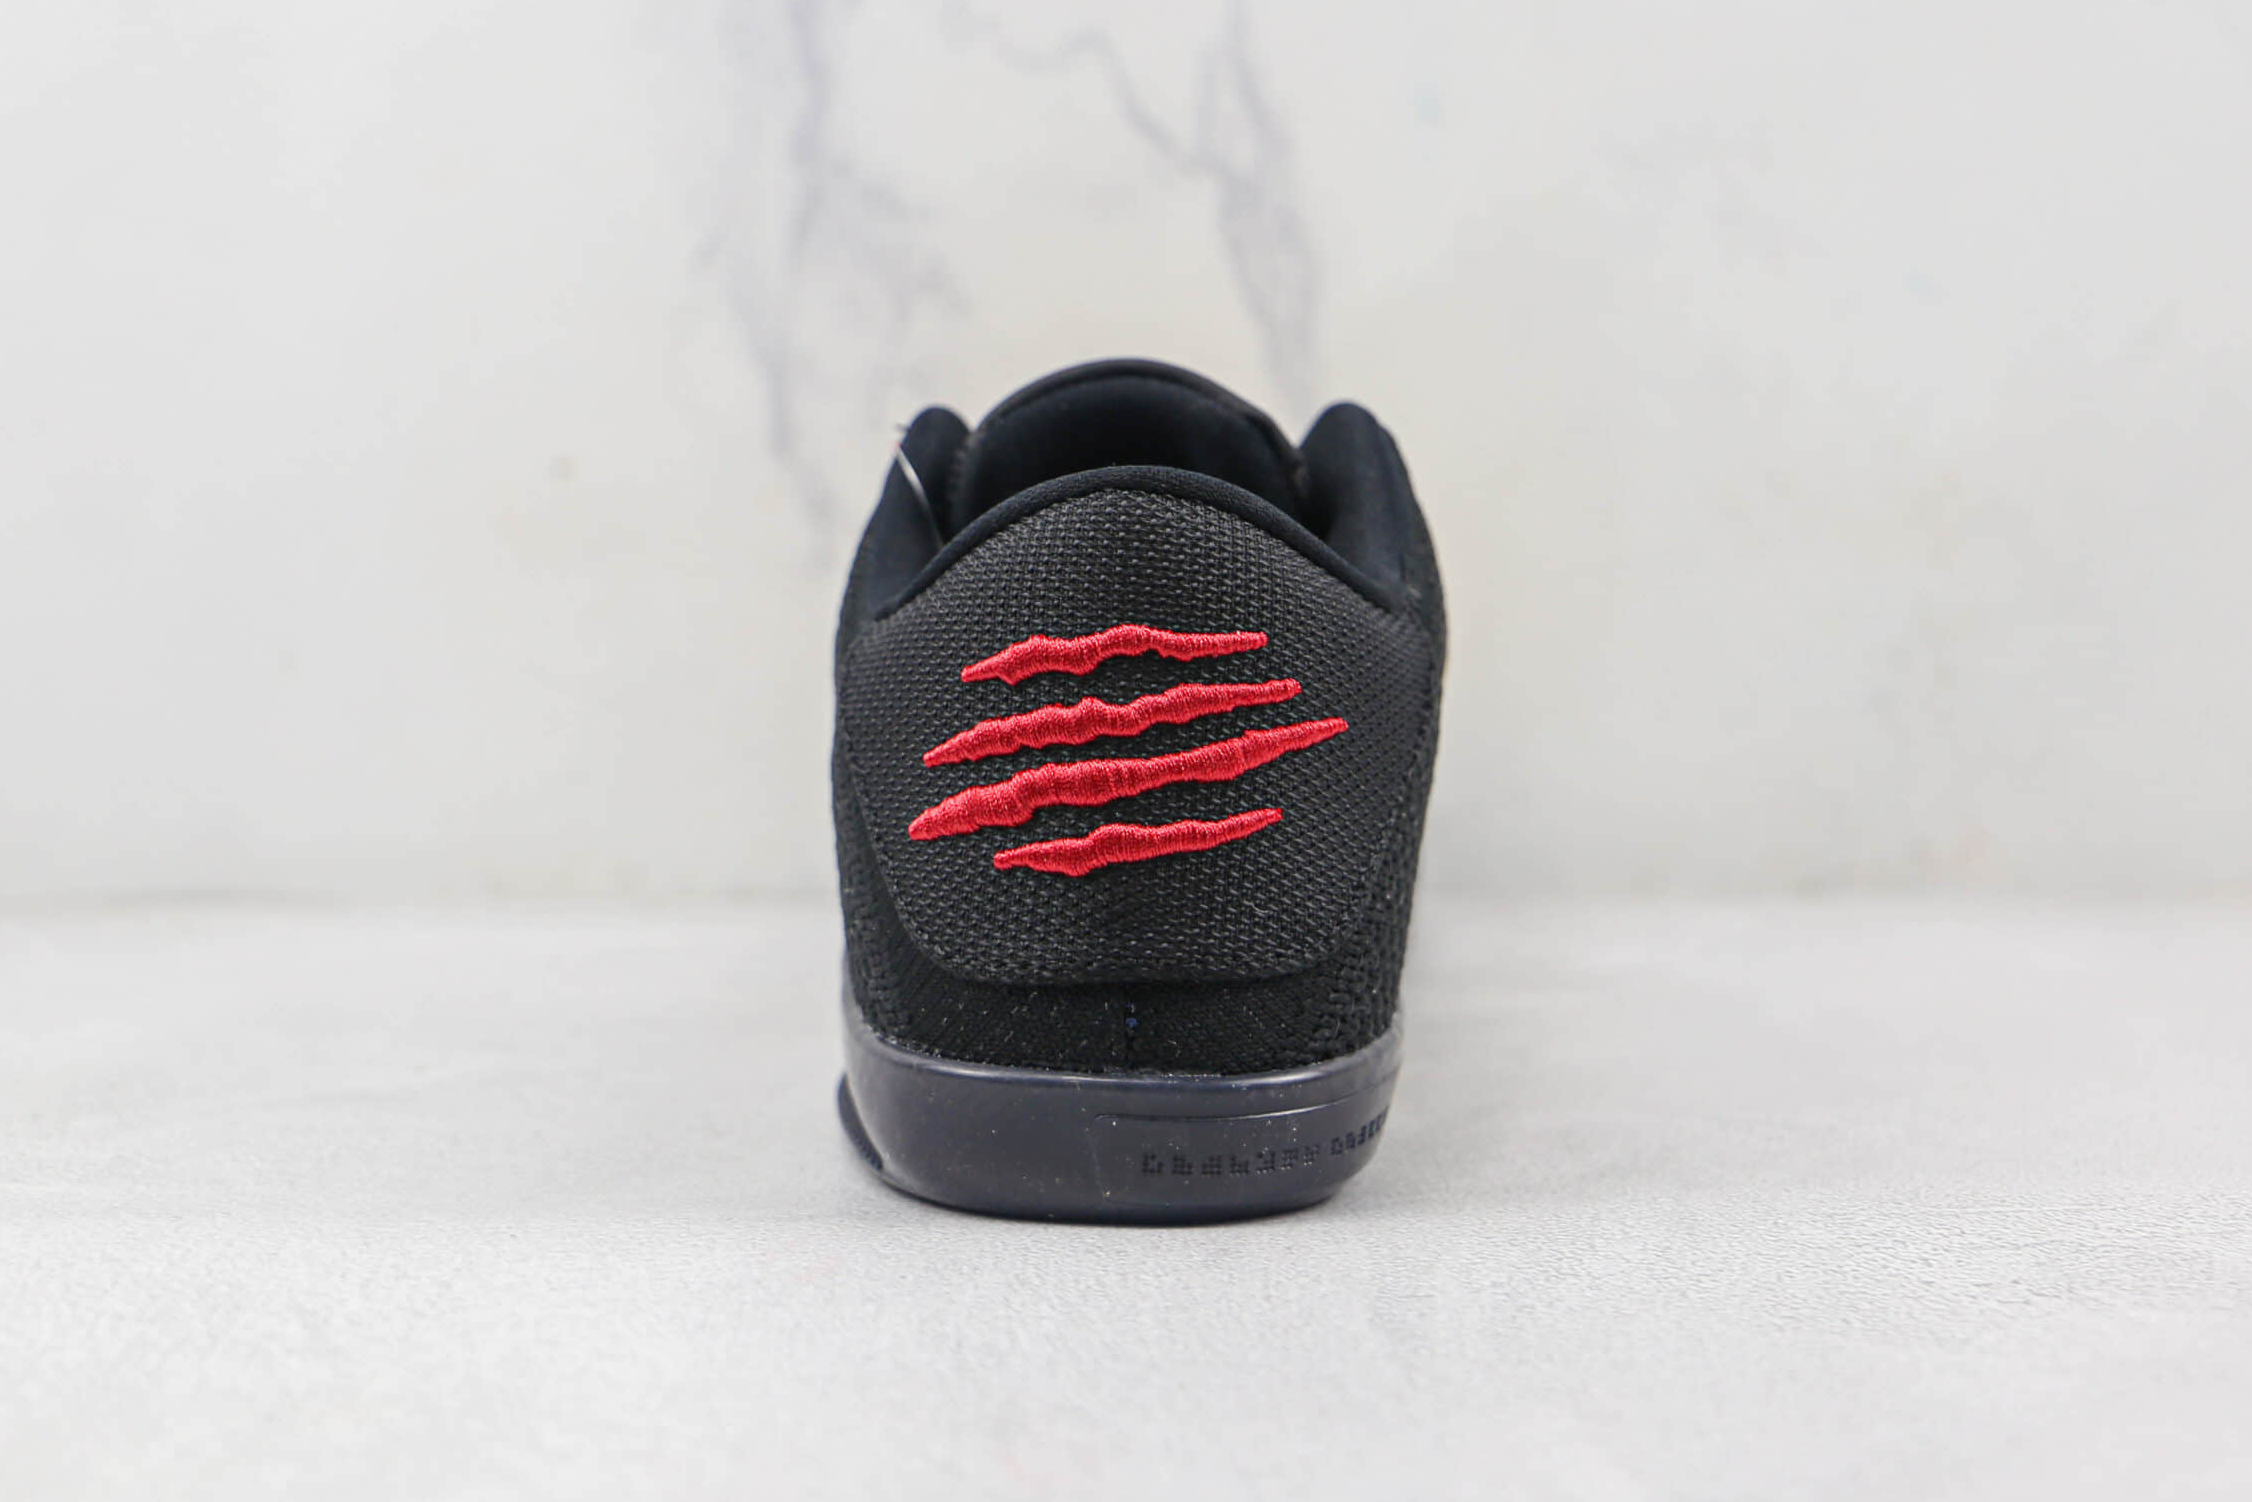 Nike Kobe 11 Elite Low 'Bruce Lee' 822675-706 - Shop now for iconic Kobe sneakers!